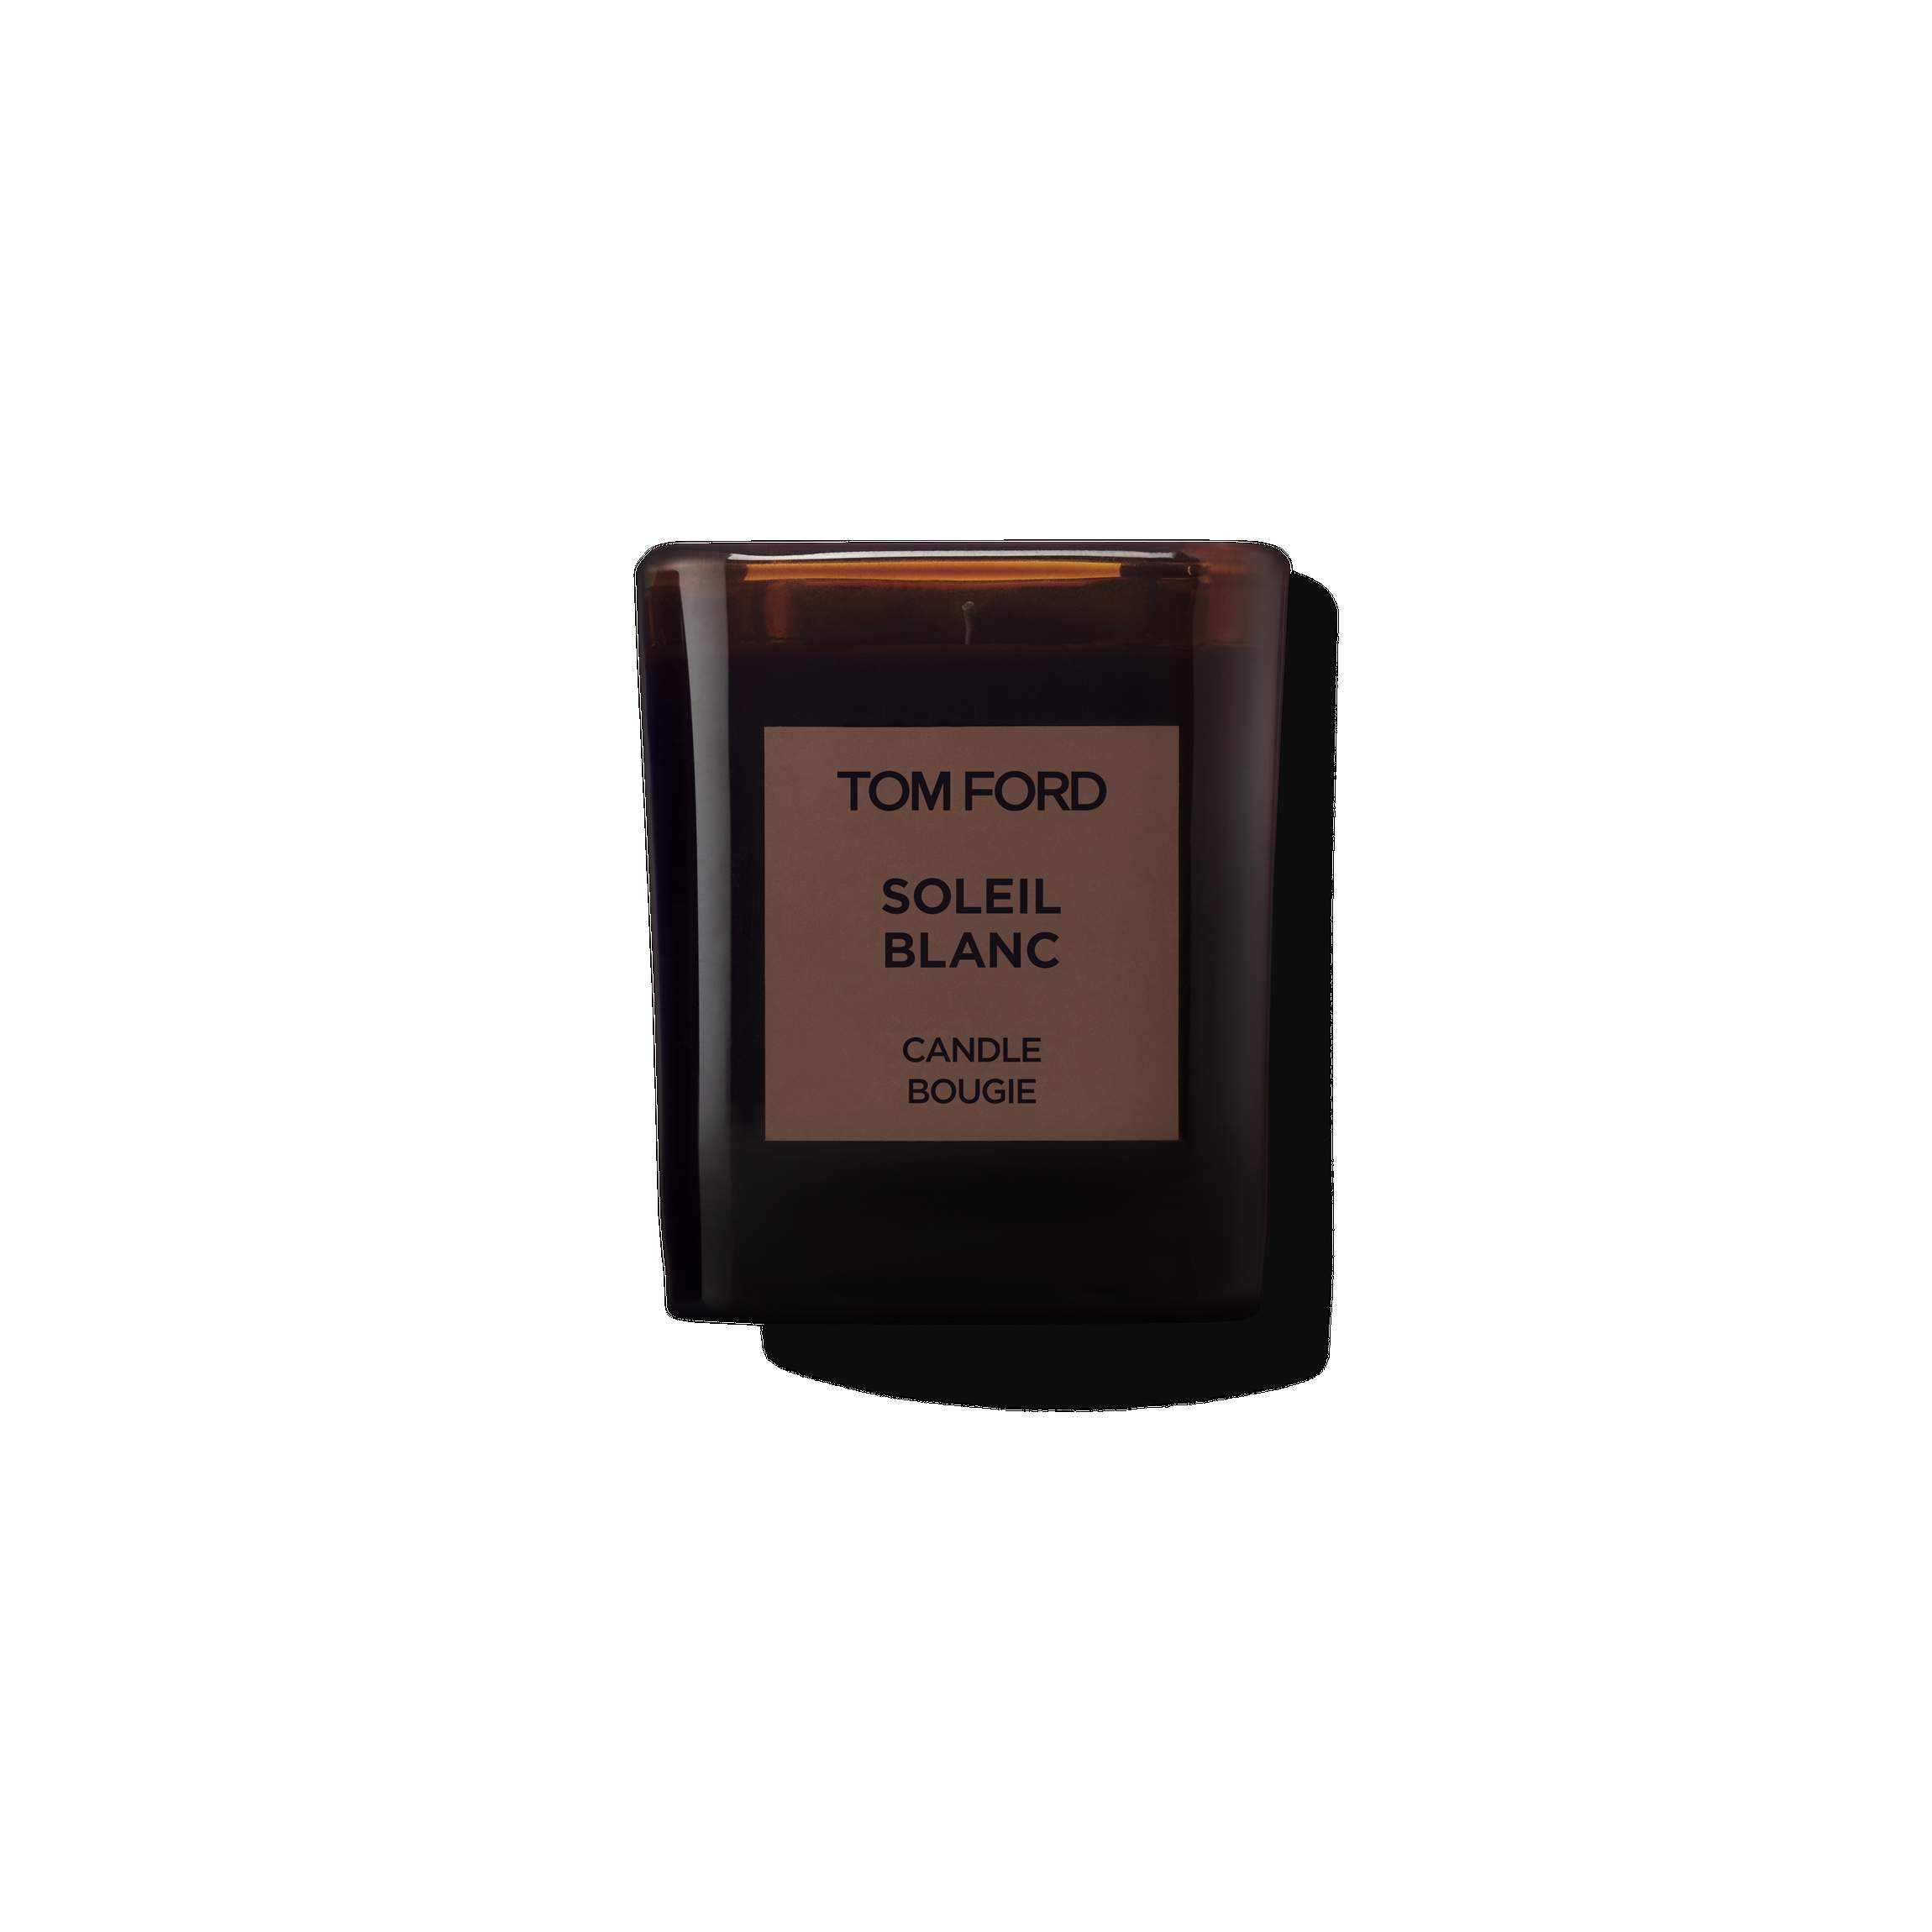 PRIVATE BLEND SOLEIL BLANC CANDLE – Opulent Fragrances